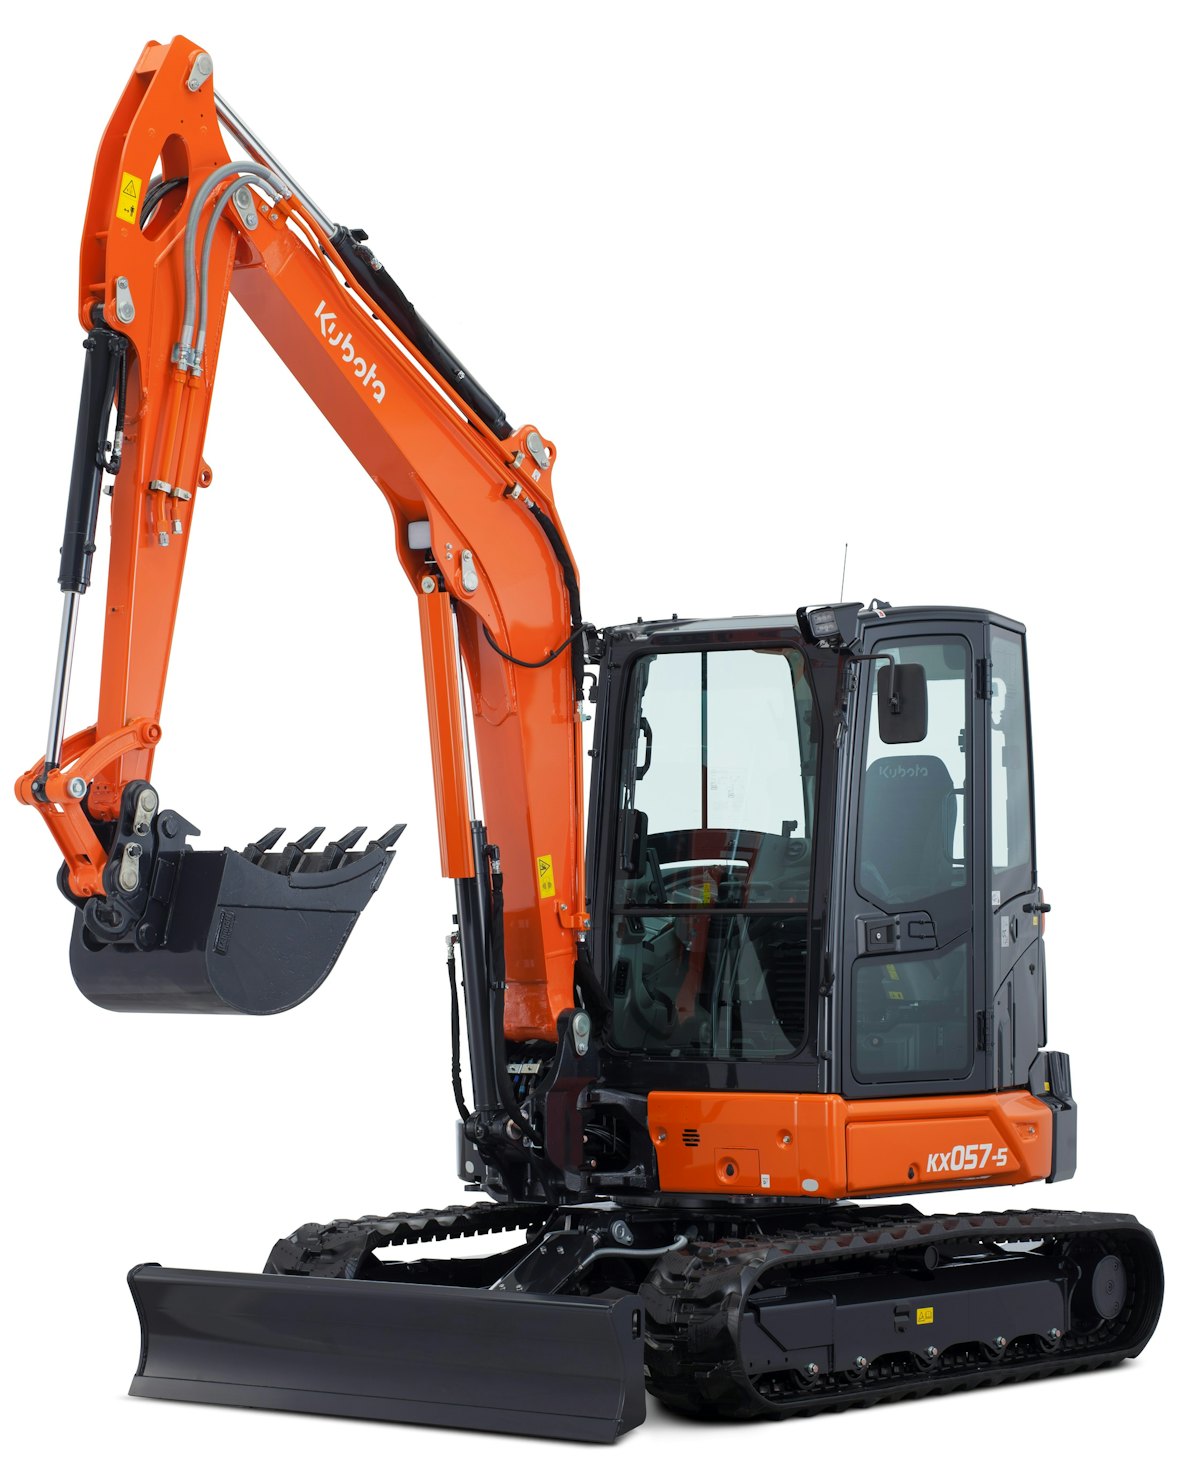 Kubota Previews New 2021 Construction Equipment